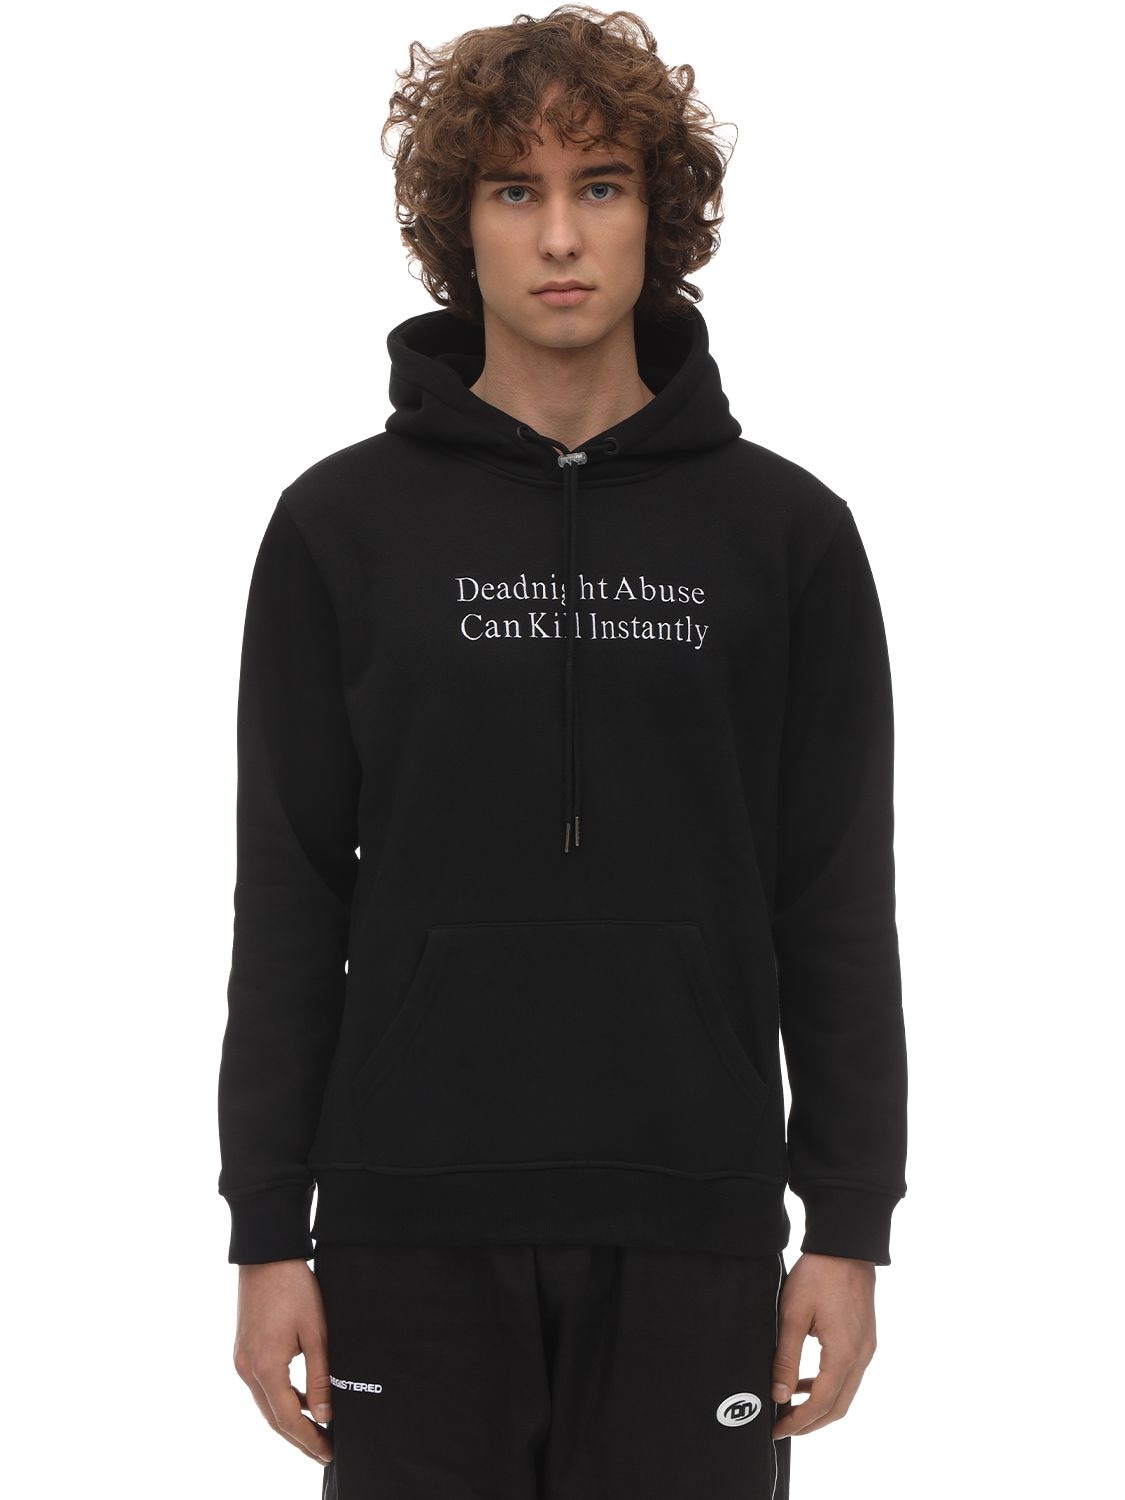 Deadnight Abuse Cotton Sweatshirt Hoodie In Black